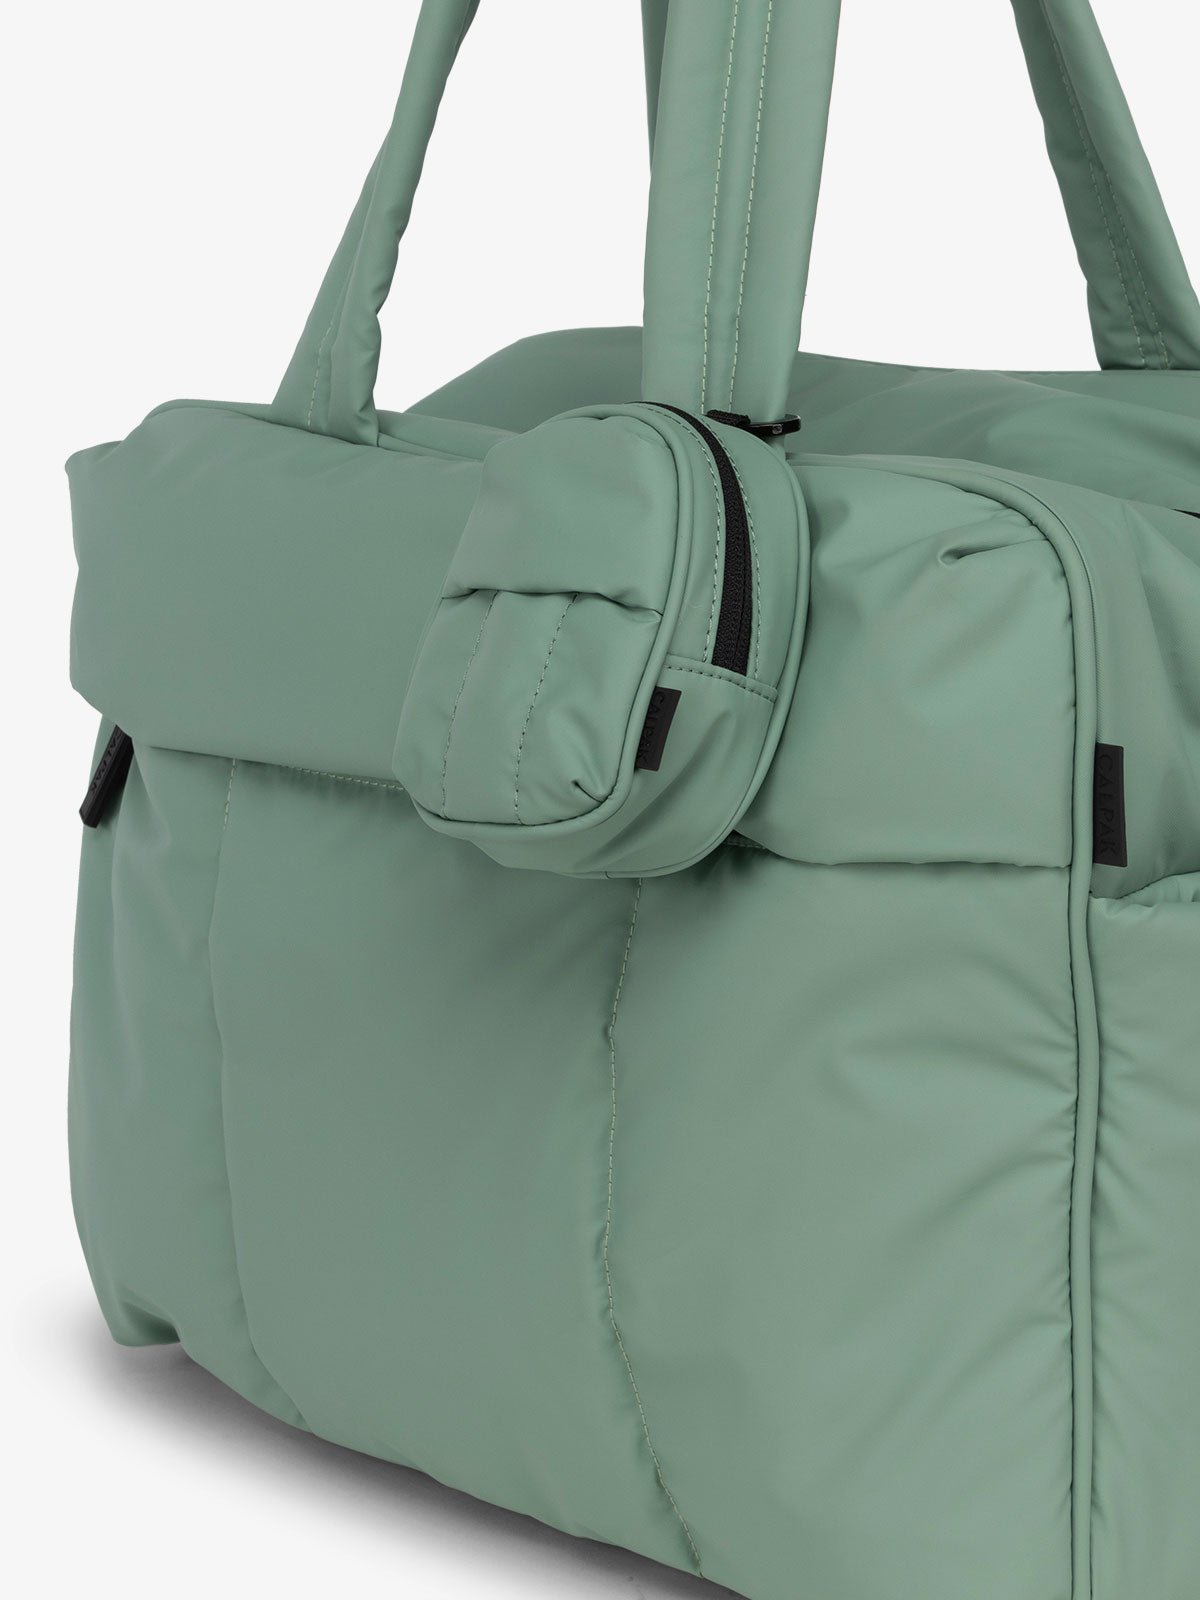 CALPAK Luka backpack key chain with back versatile elastic wrist strap and carabiner clip in matte sage green